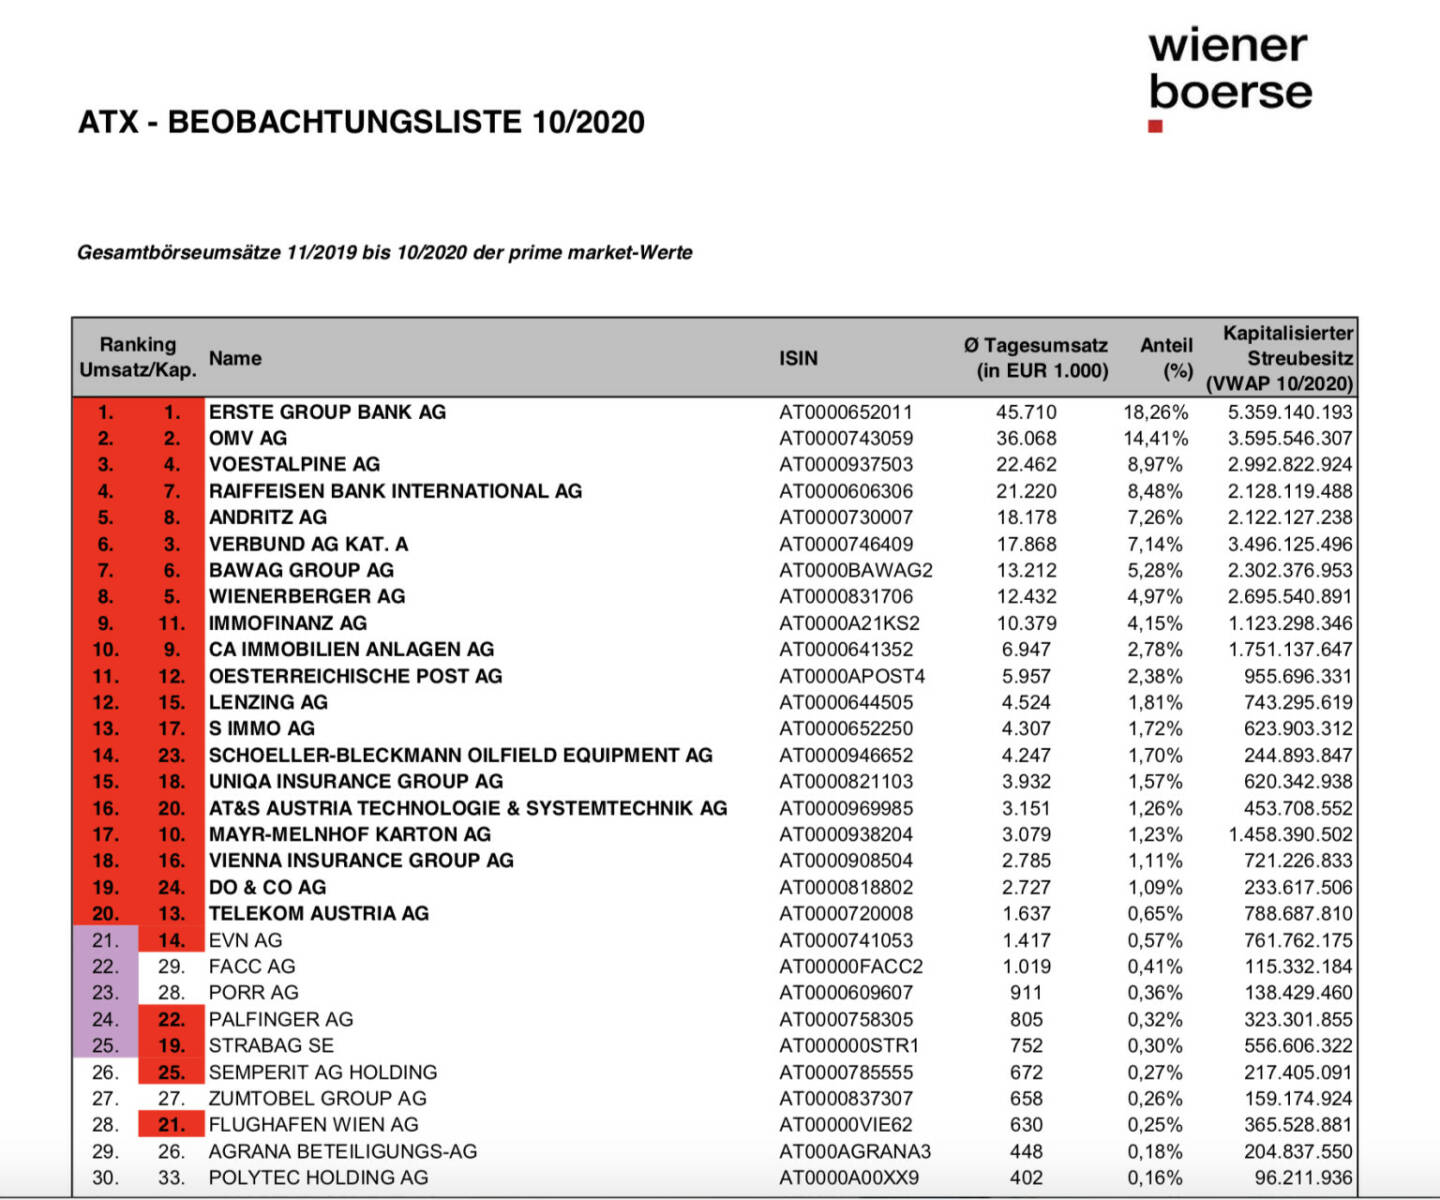 ATX-Beobachtungsliste 10/2020 (c) Wiener Börse